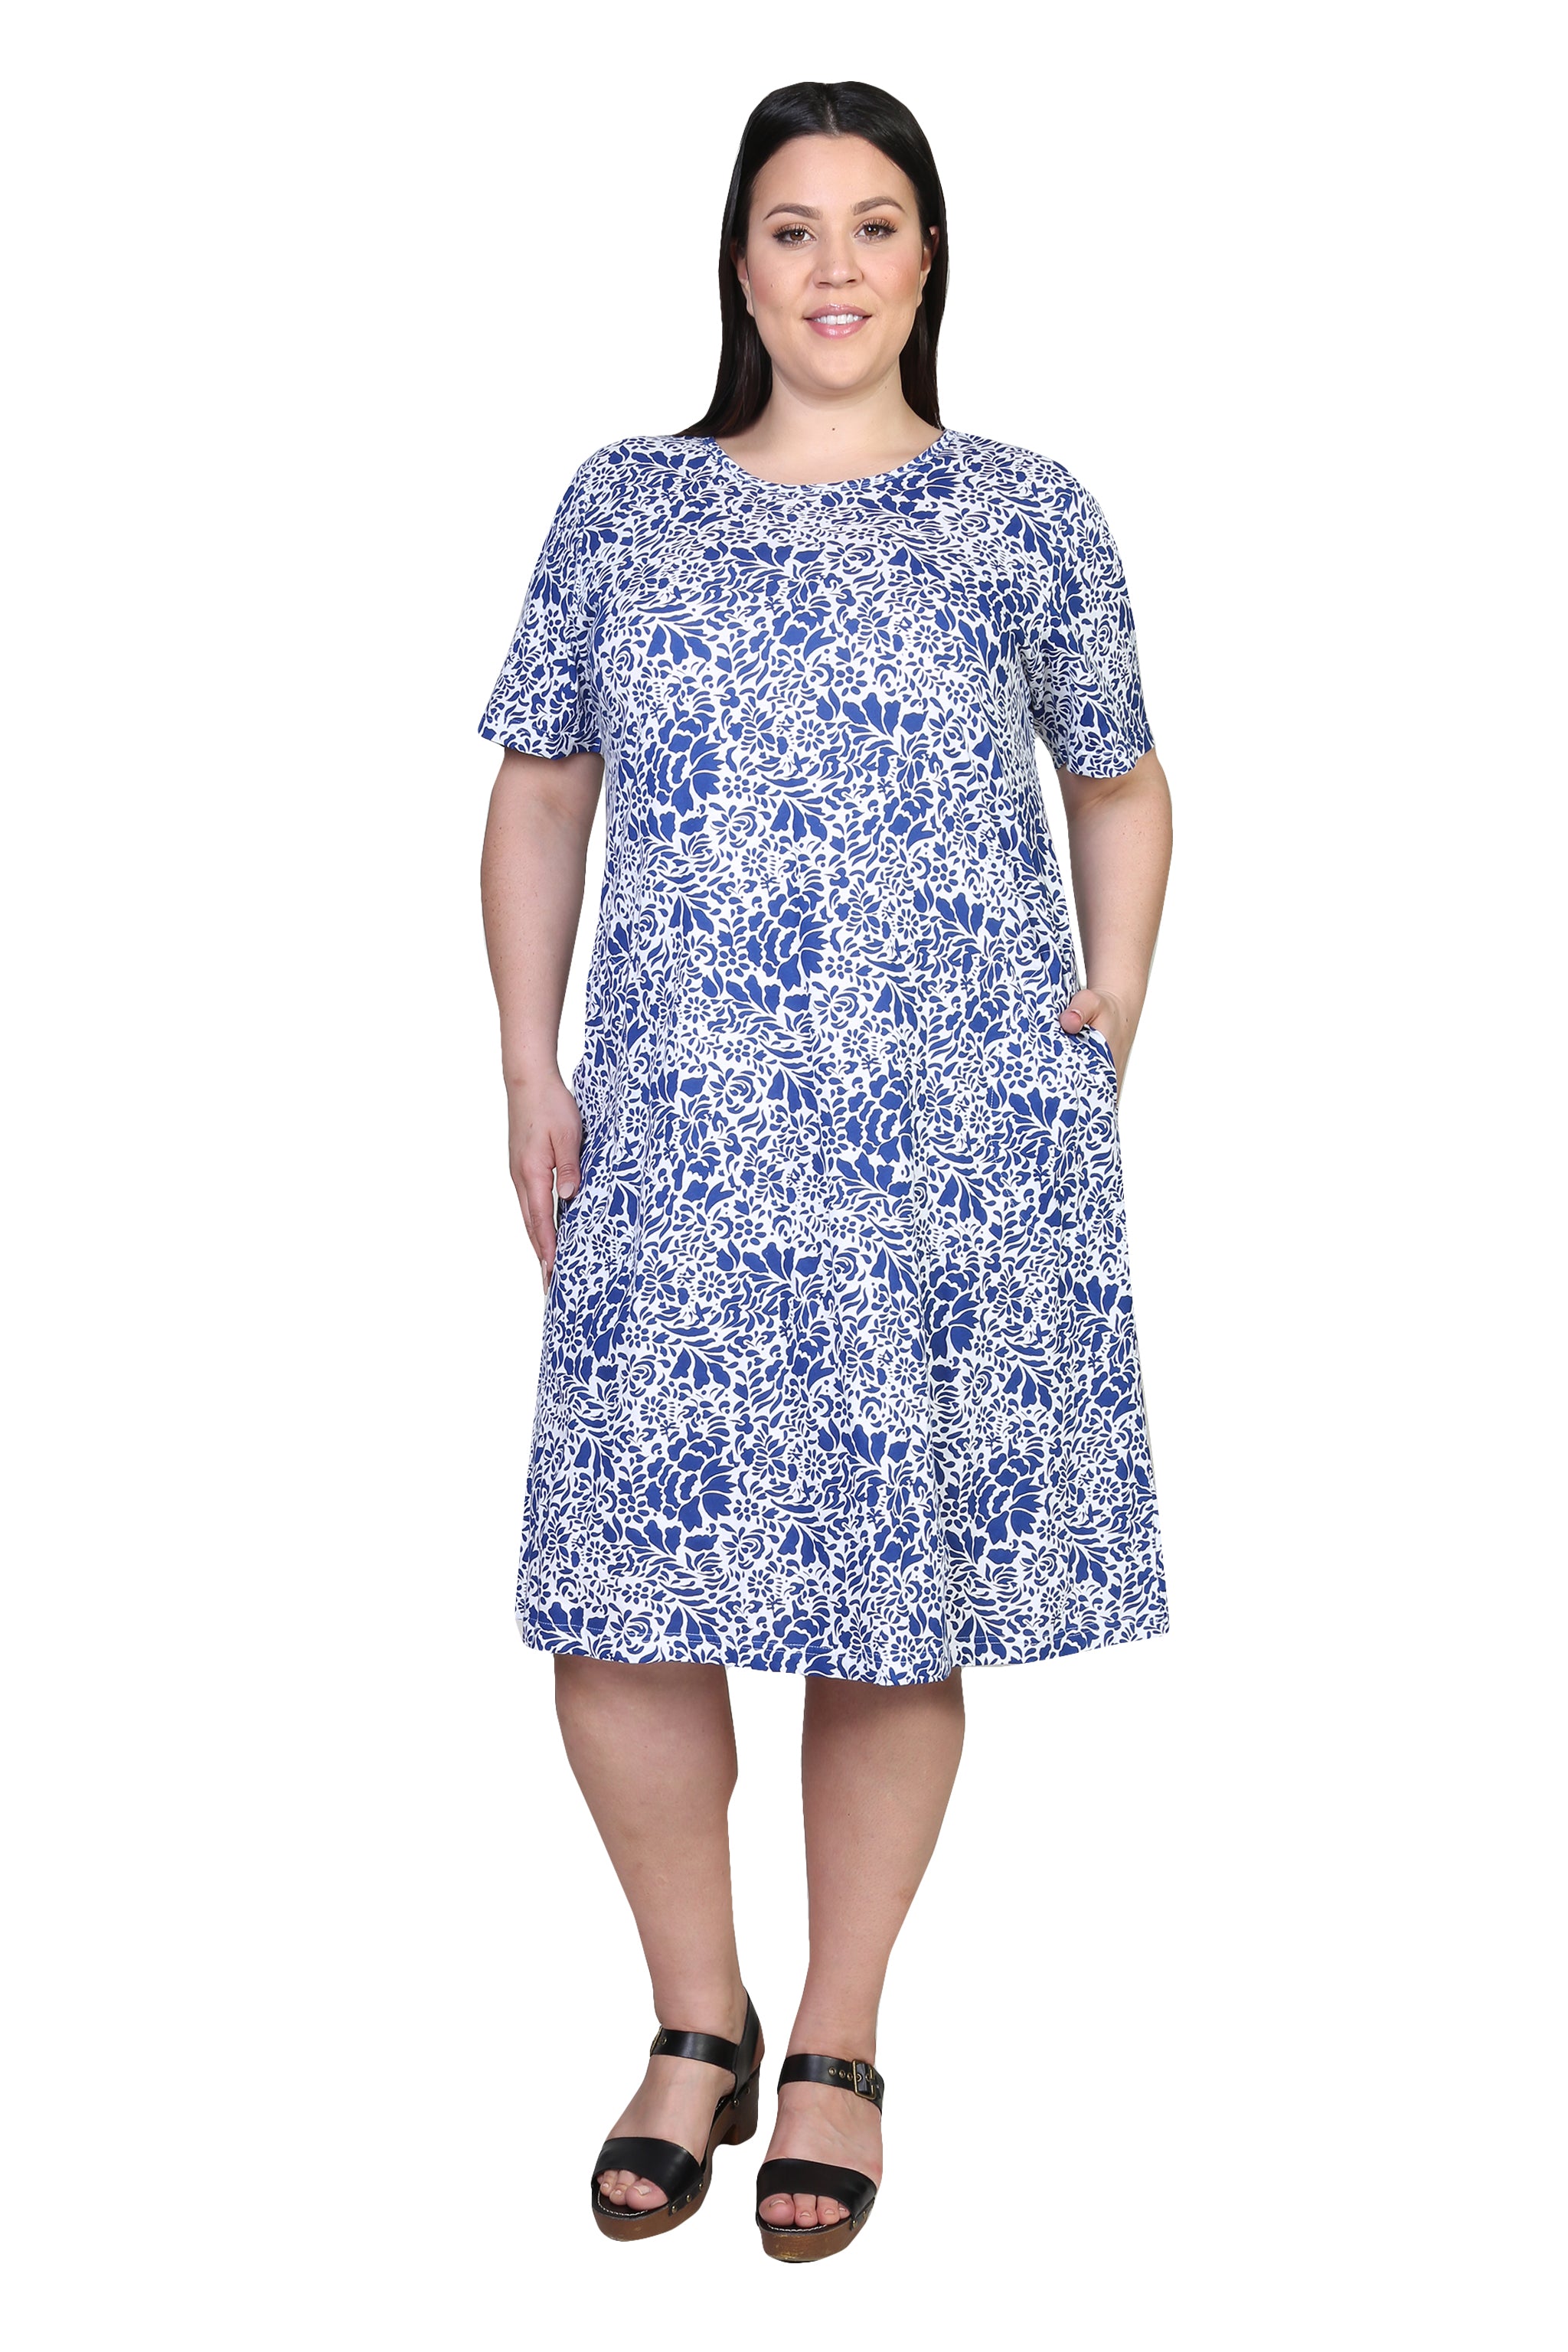 La Cera Cotton Jersey Knit A-Line Dress - Plus Size